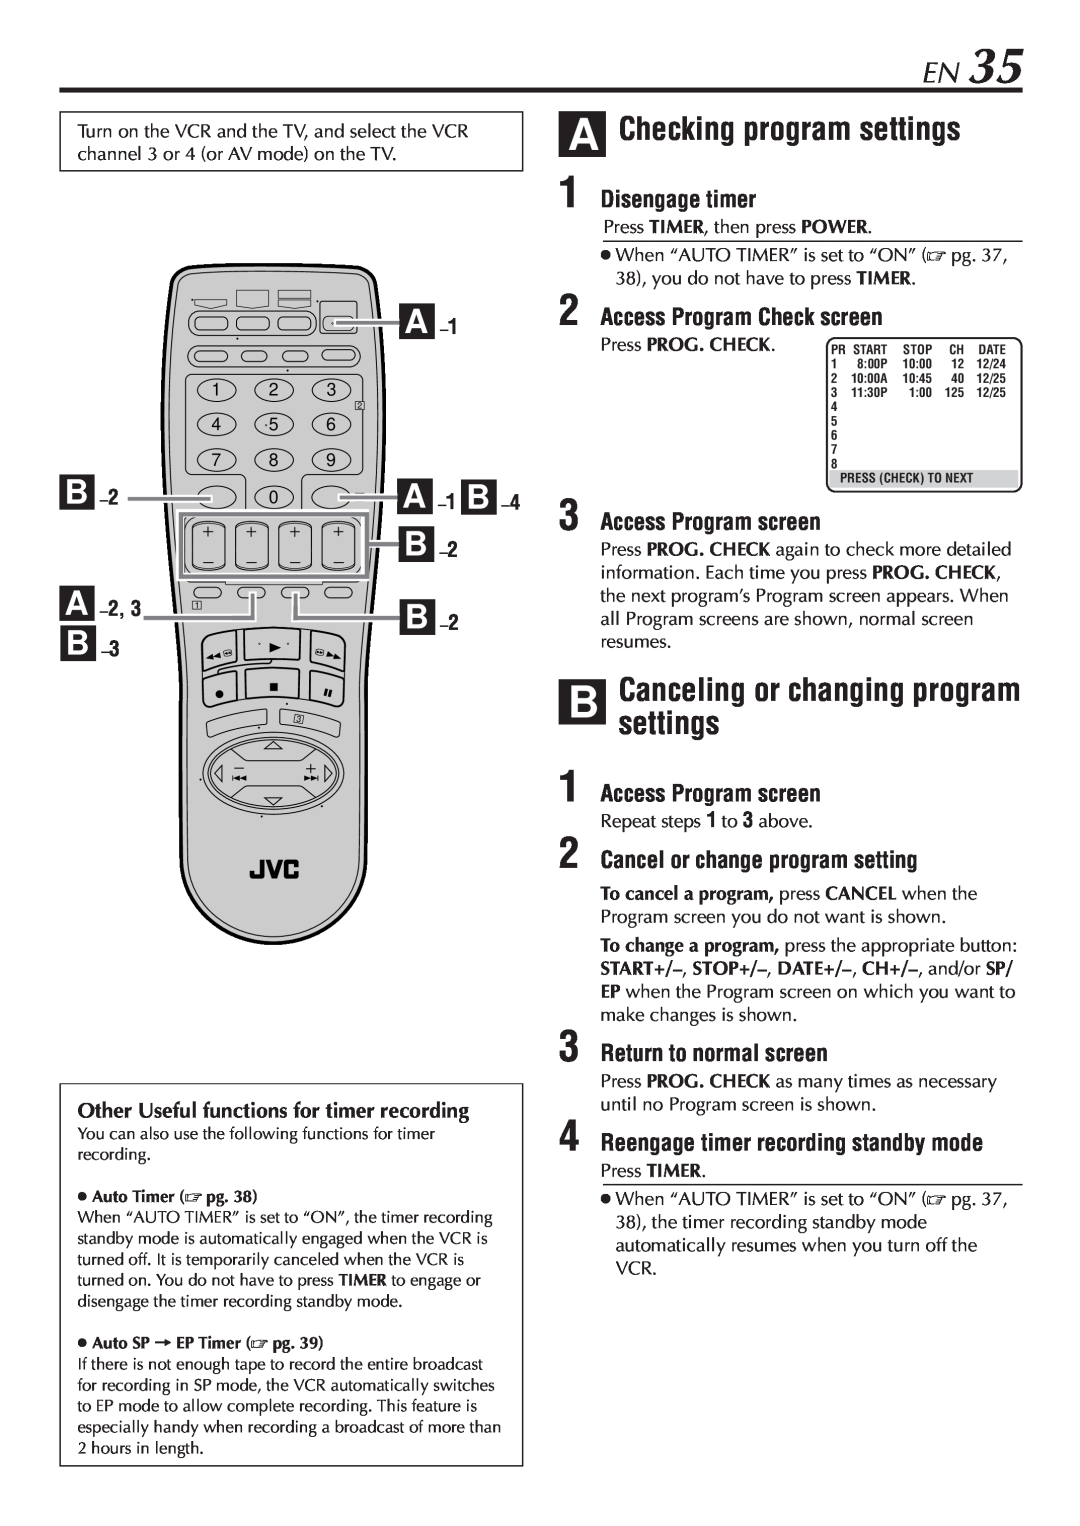 JVC SR-V10U manual A -1 B, A Checking program settings, Disengage timer, Access Program Check screen, A -2,3 